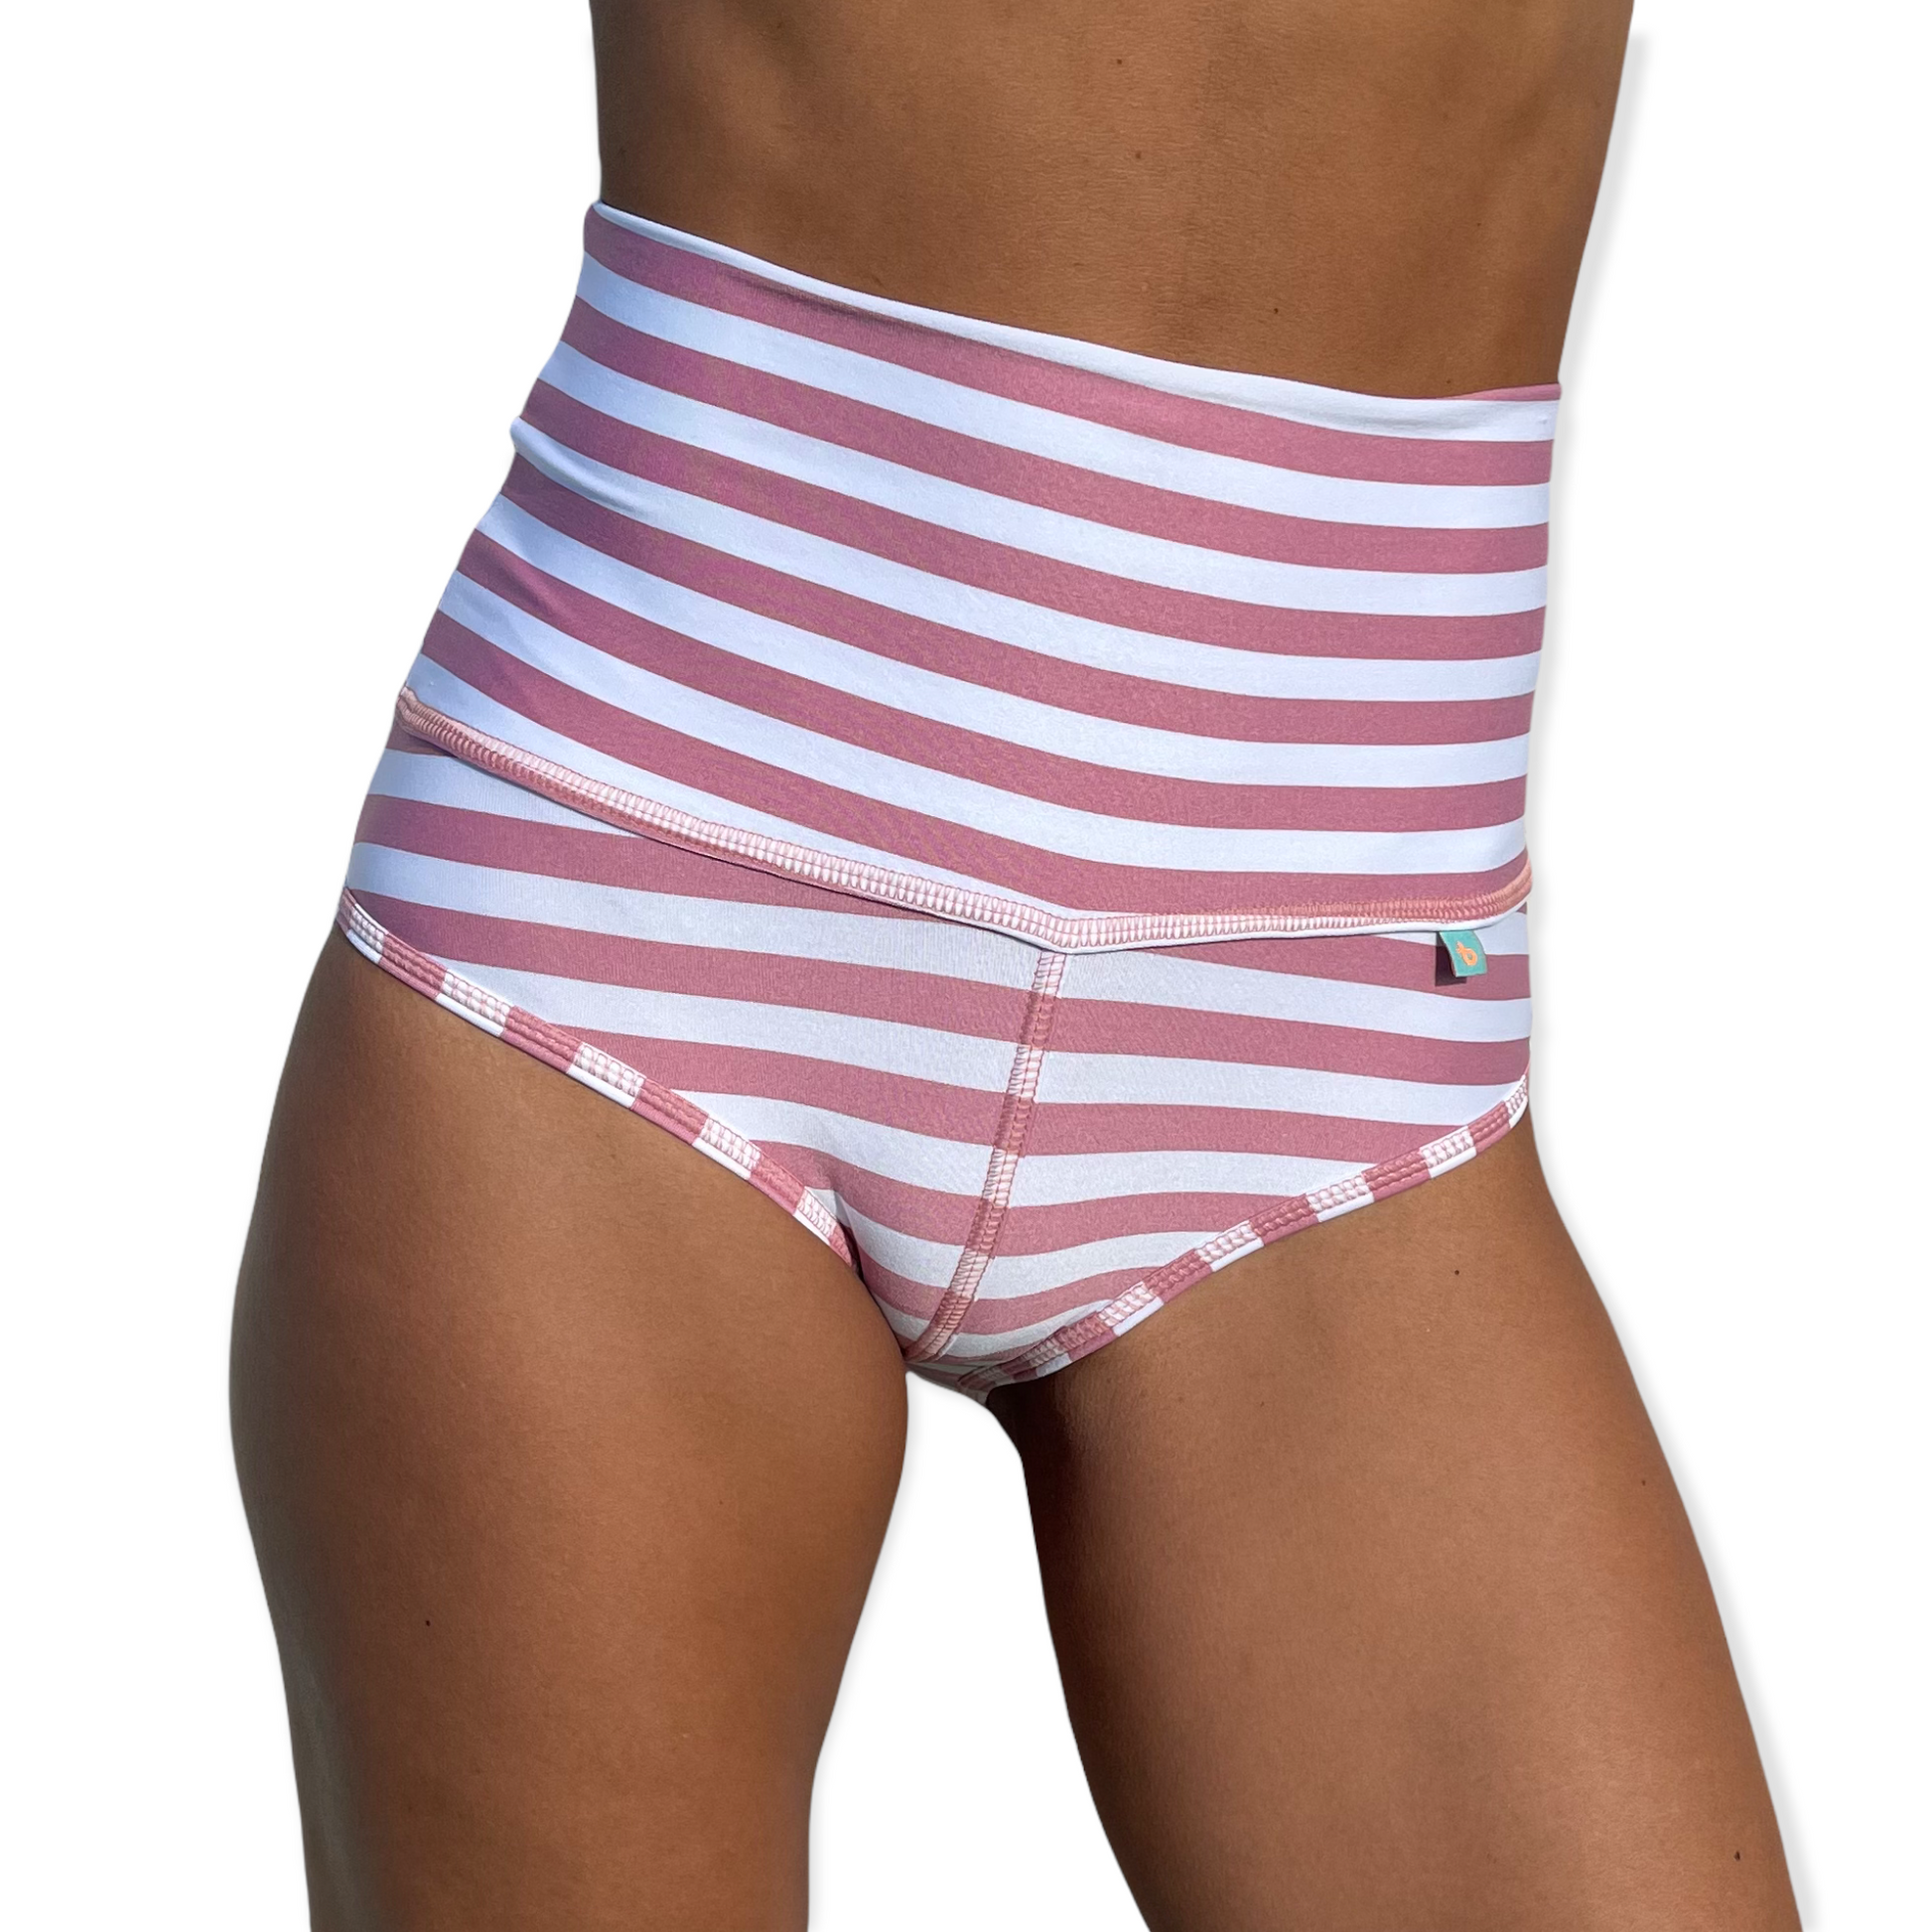 Pink and white stripes high waist shorts for Bikram Hot Yoga